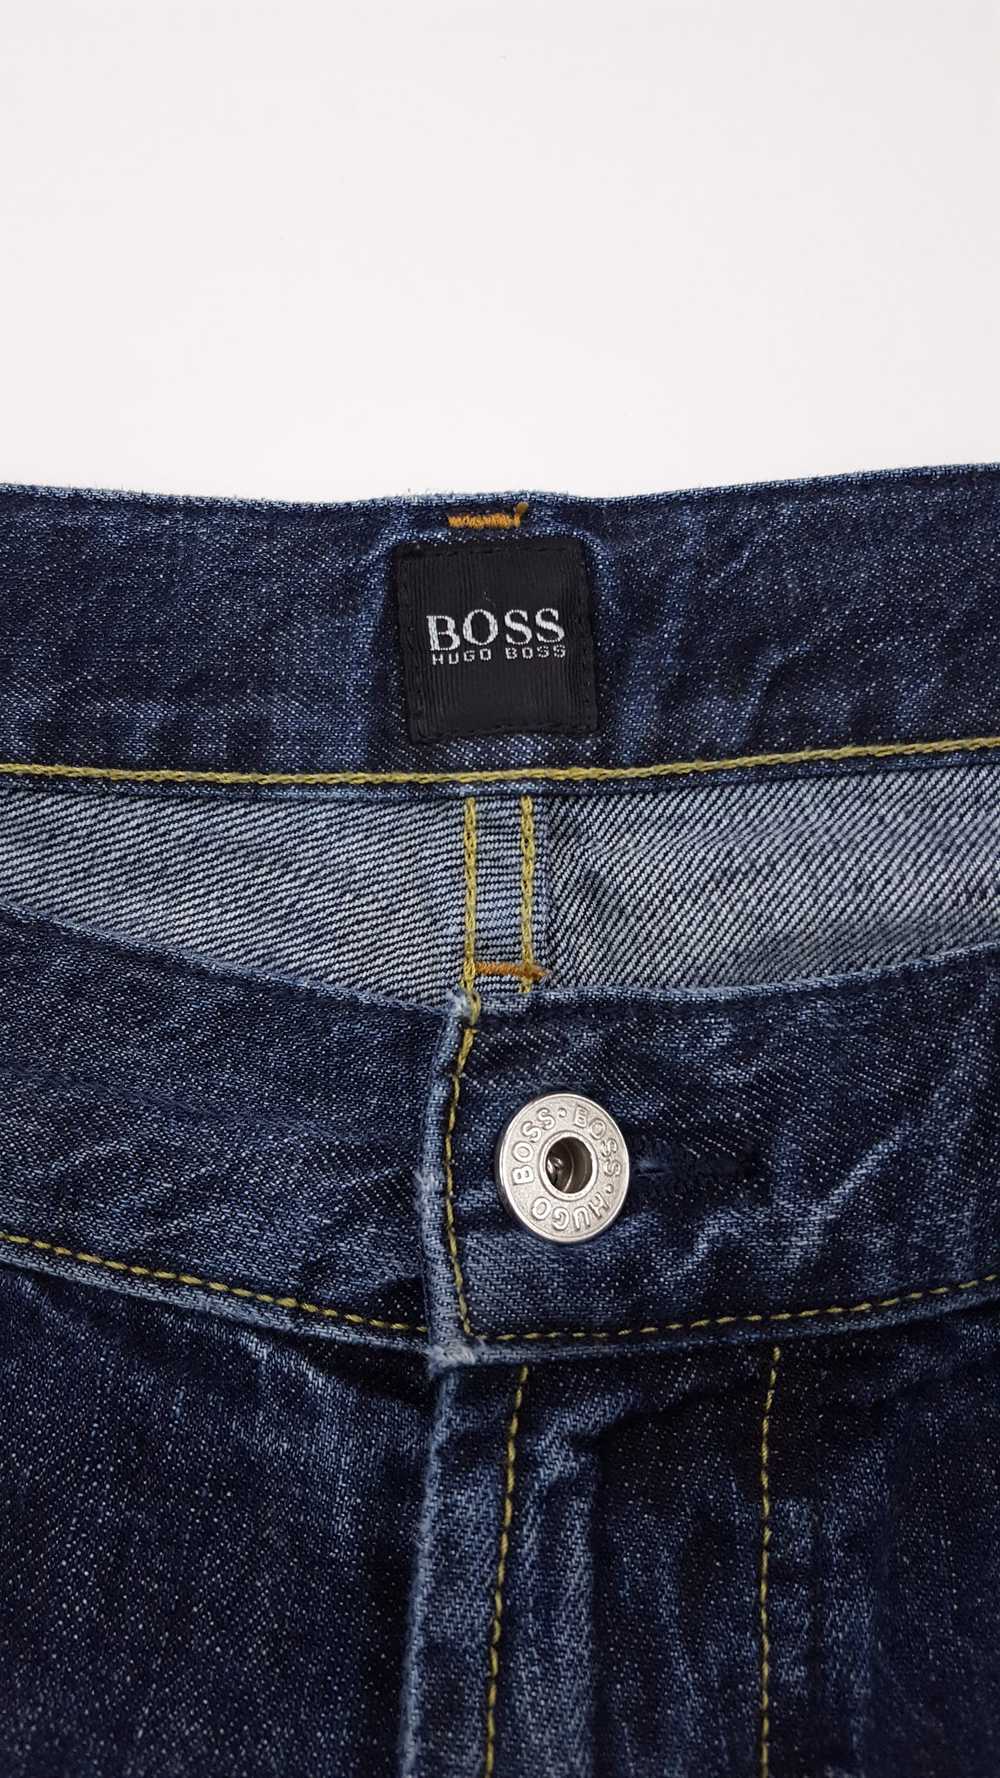 Hugo Boss Jackson Jeans - image 6